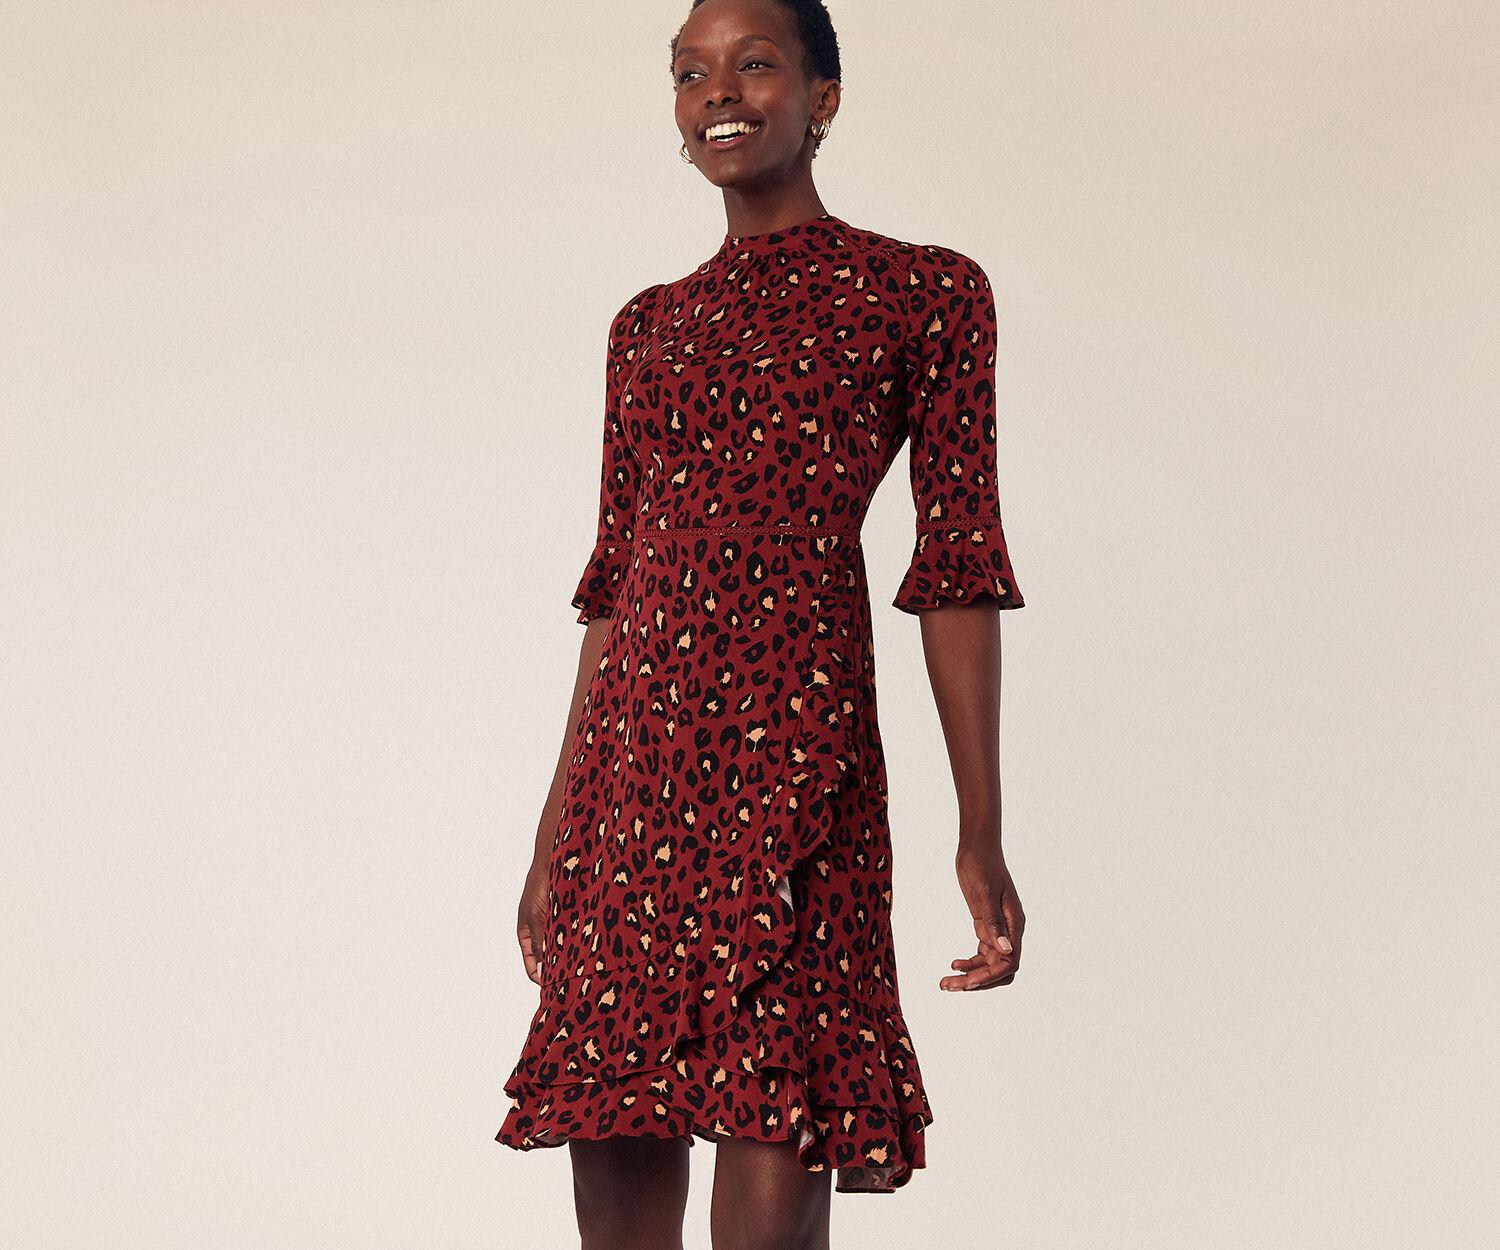 Oasis Lace Belinda Leopard Dress in Burgundy (Red) - Save 38% - Lyst